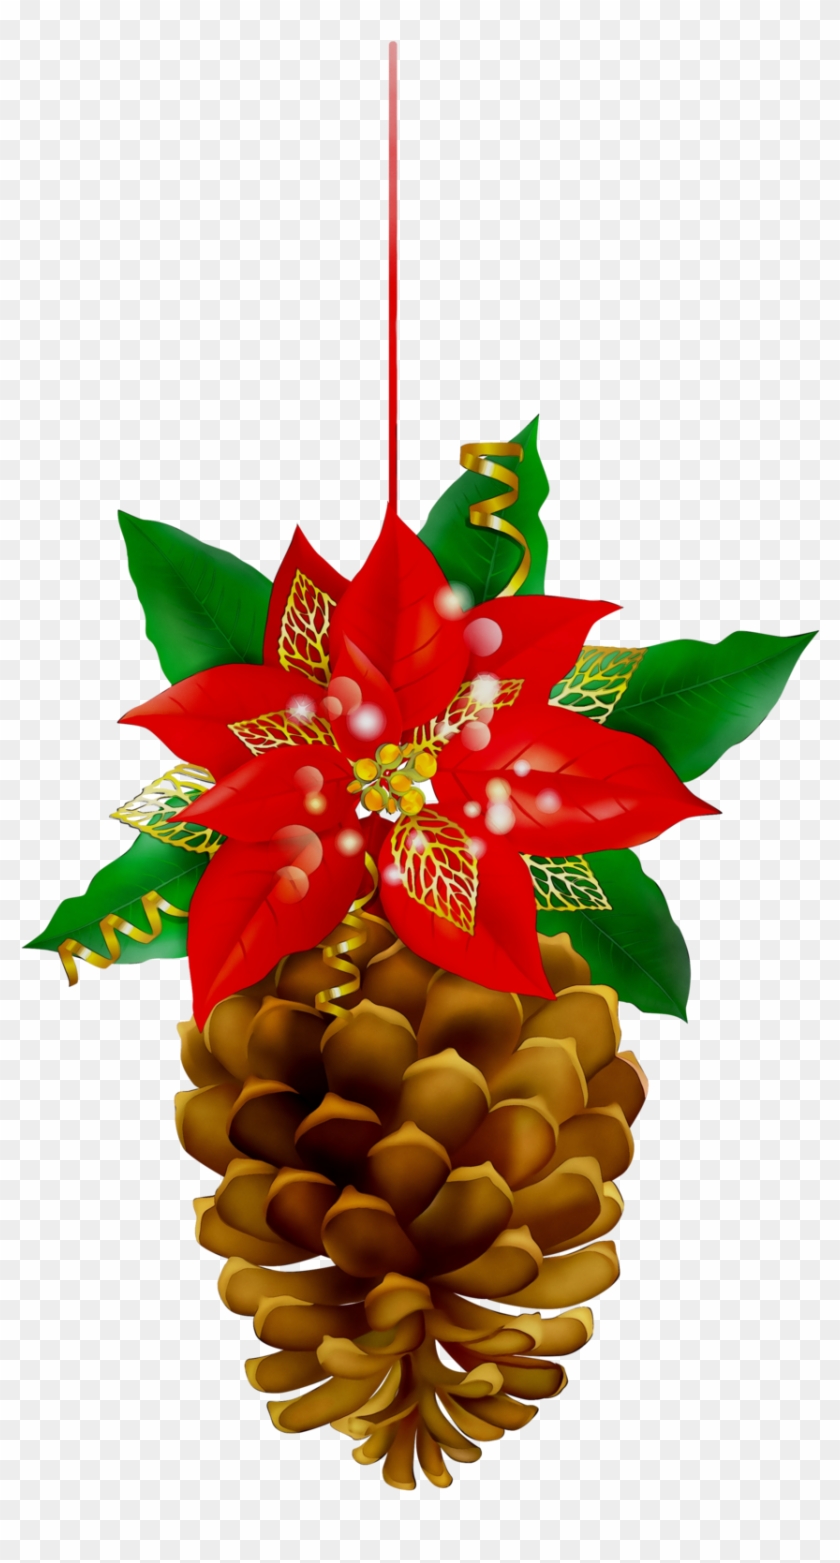 Christmas Pinecone Clipart Christmas Day Poinsettia - Christmas Pinecone Clipart Christmas Day Poinsettia #1556718